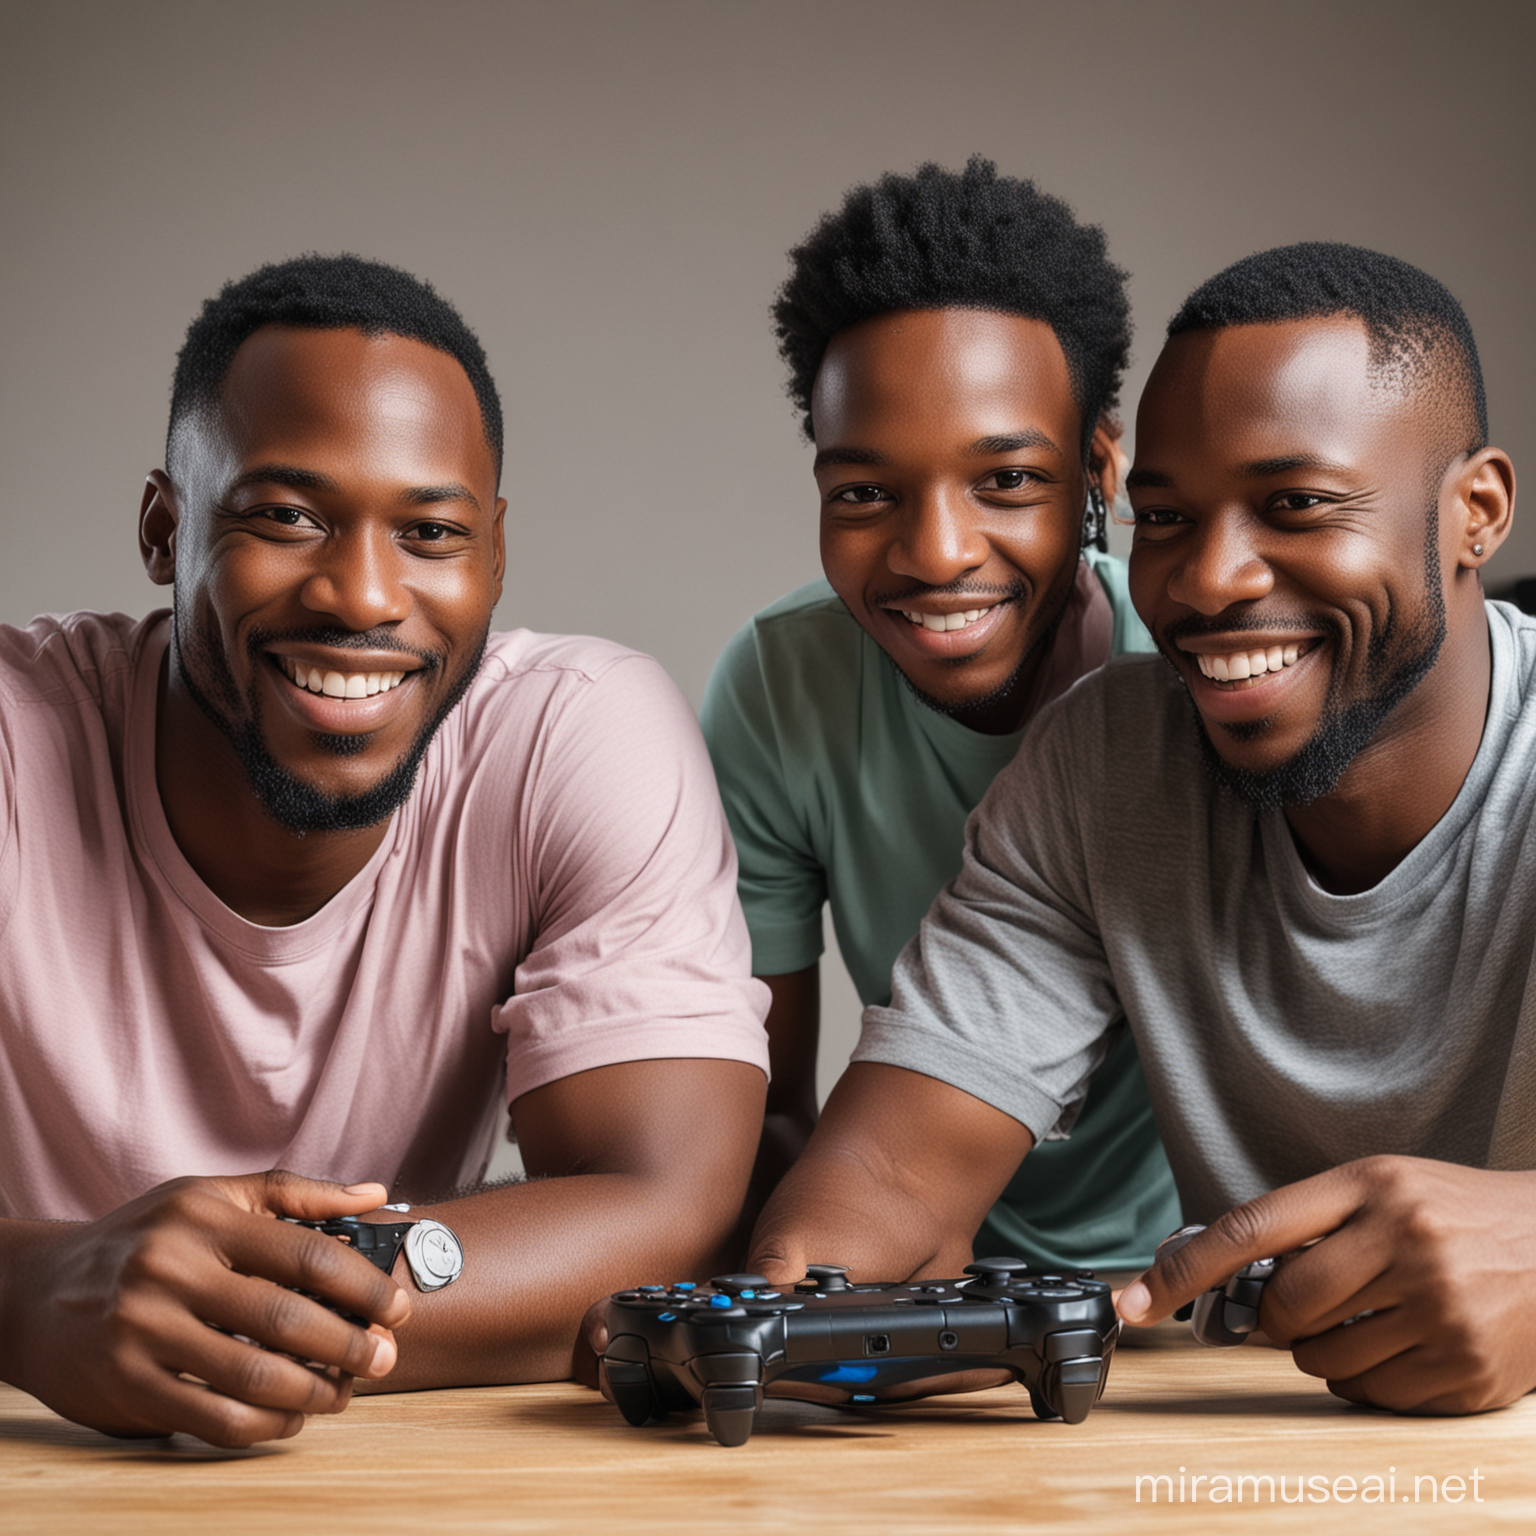 Three Joyful Africans in Their Thirties Engaged in Online Gaming Fun